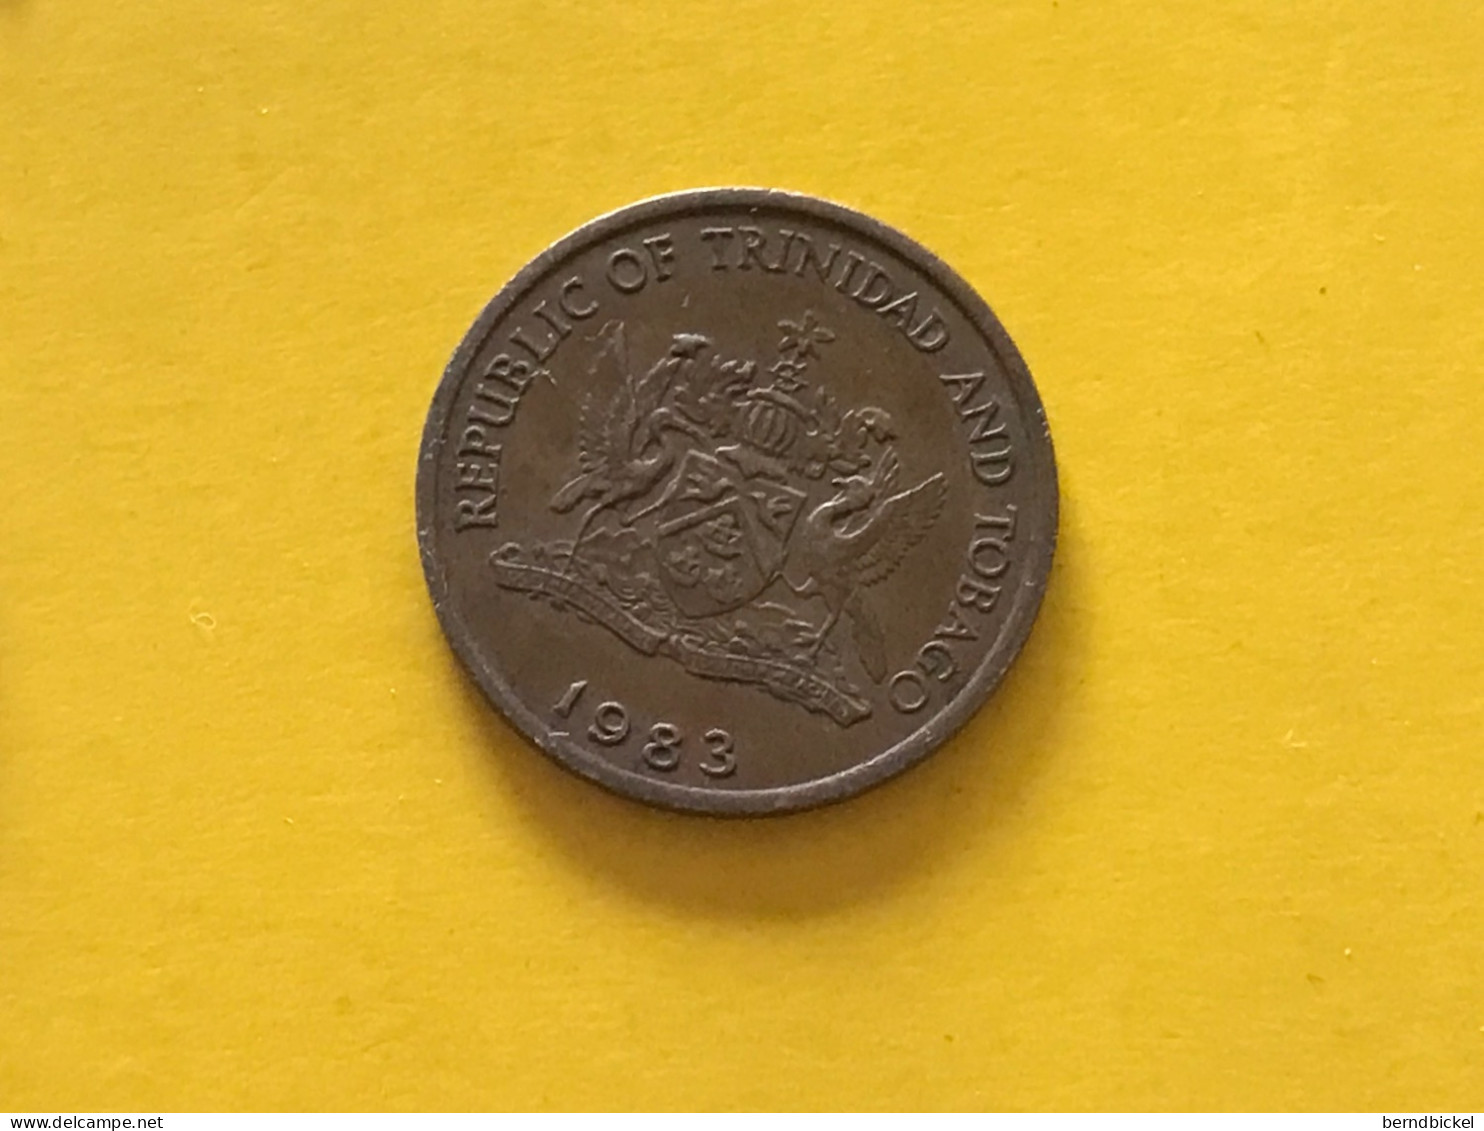 Münze Münzen Umlaufmünze Trinidad & Tobago 1 Cent 1983 - Trindad & Tobago